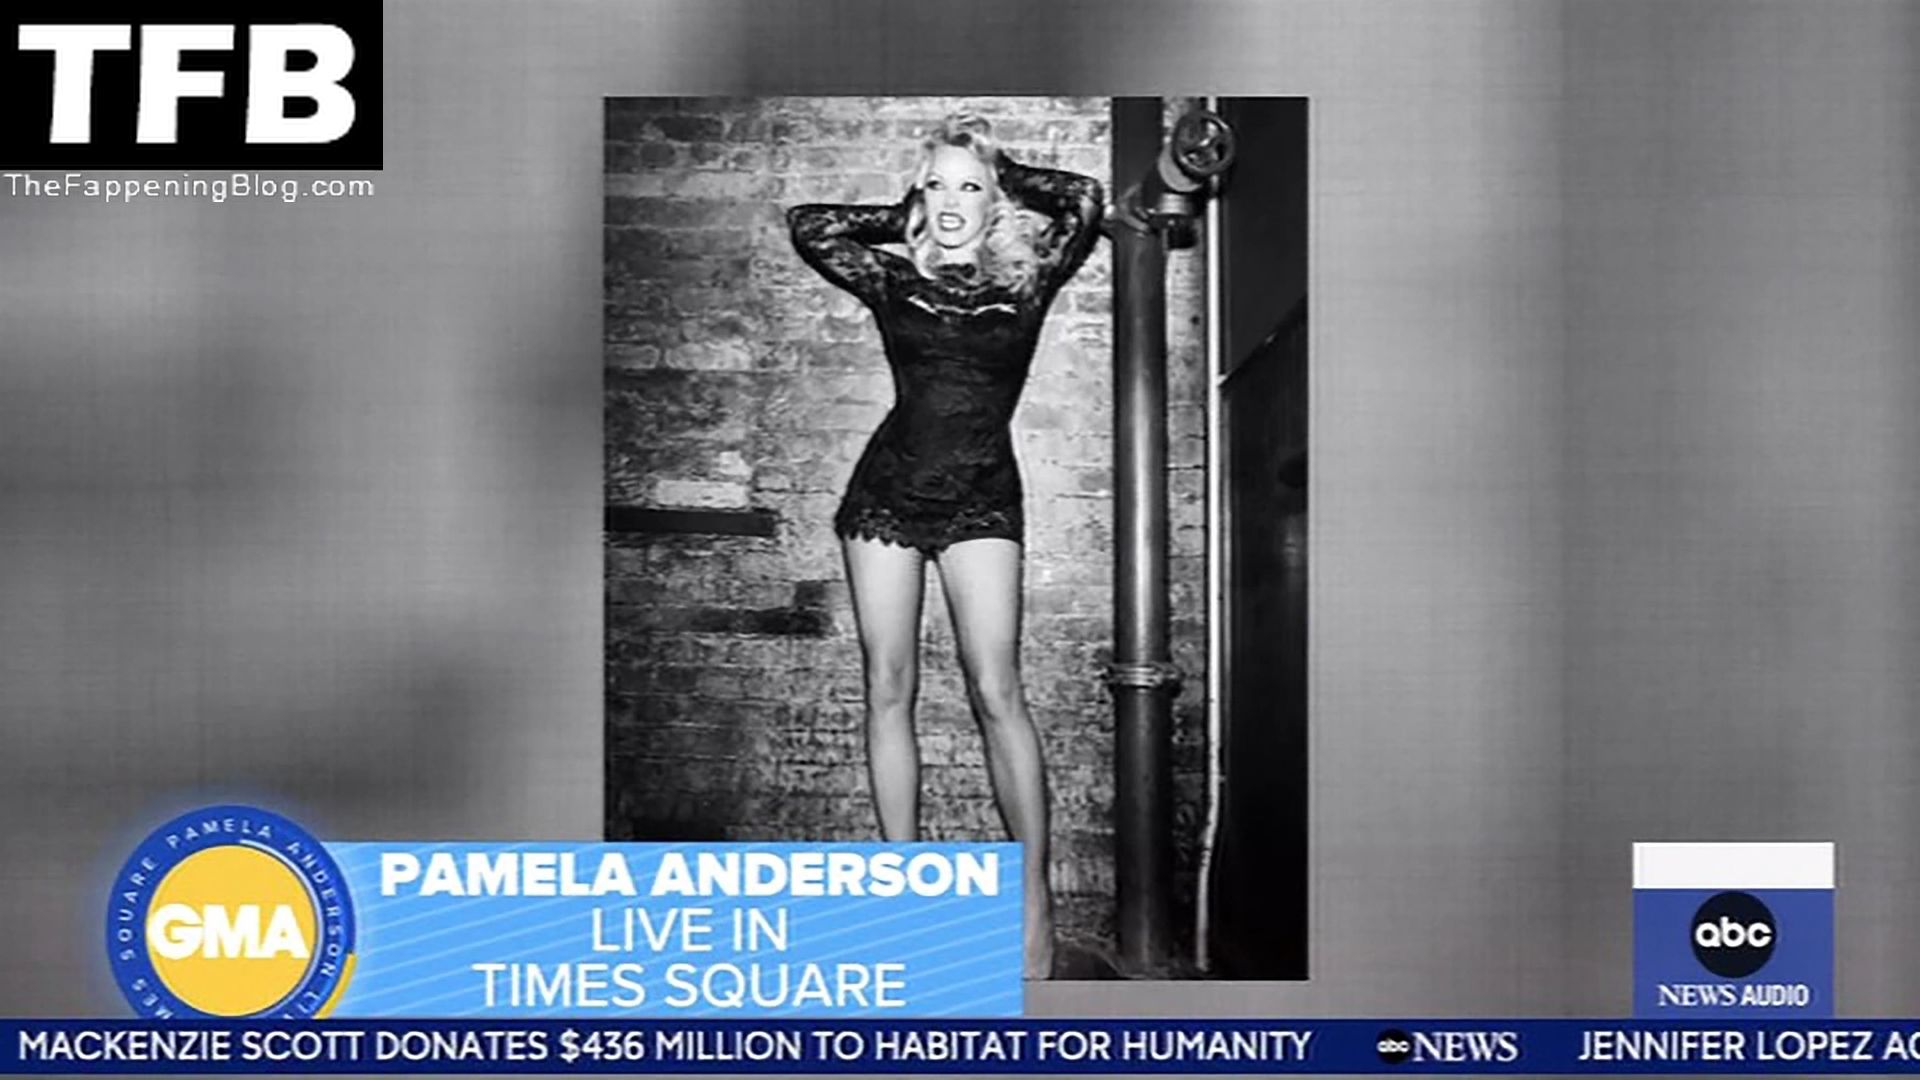 Pamela-Anderson-Hot-The-Fappening-Blog-27.jpg